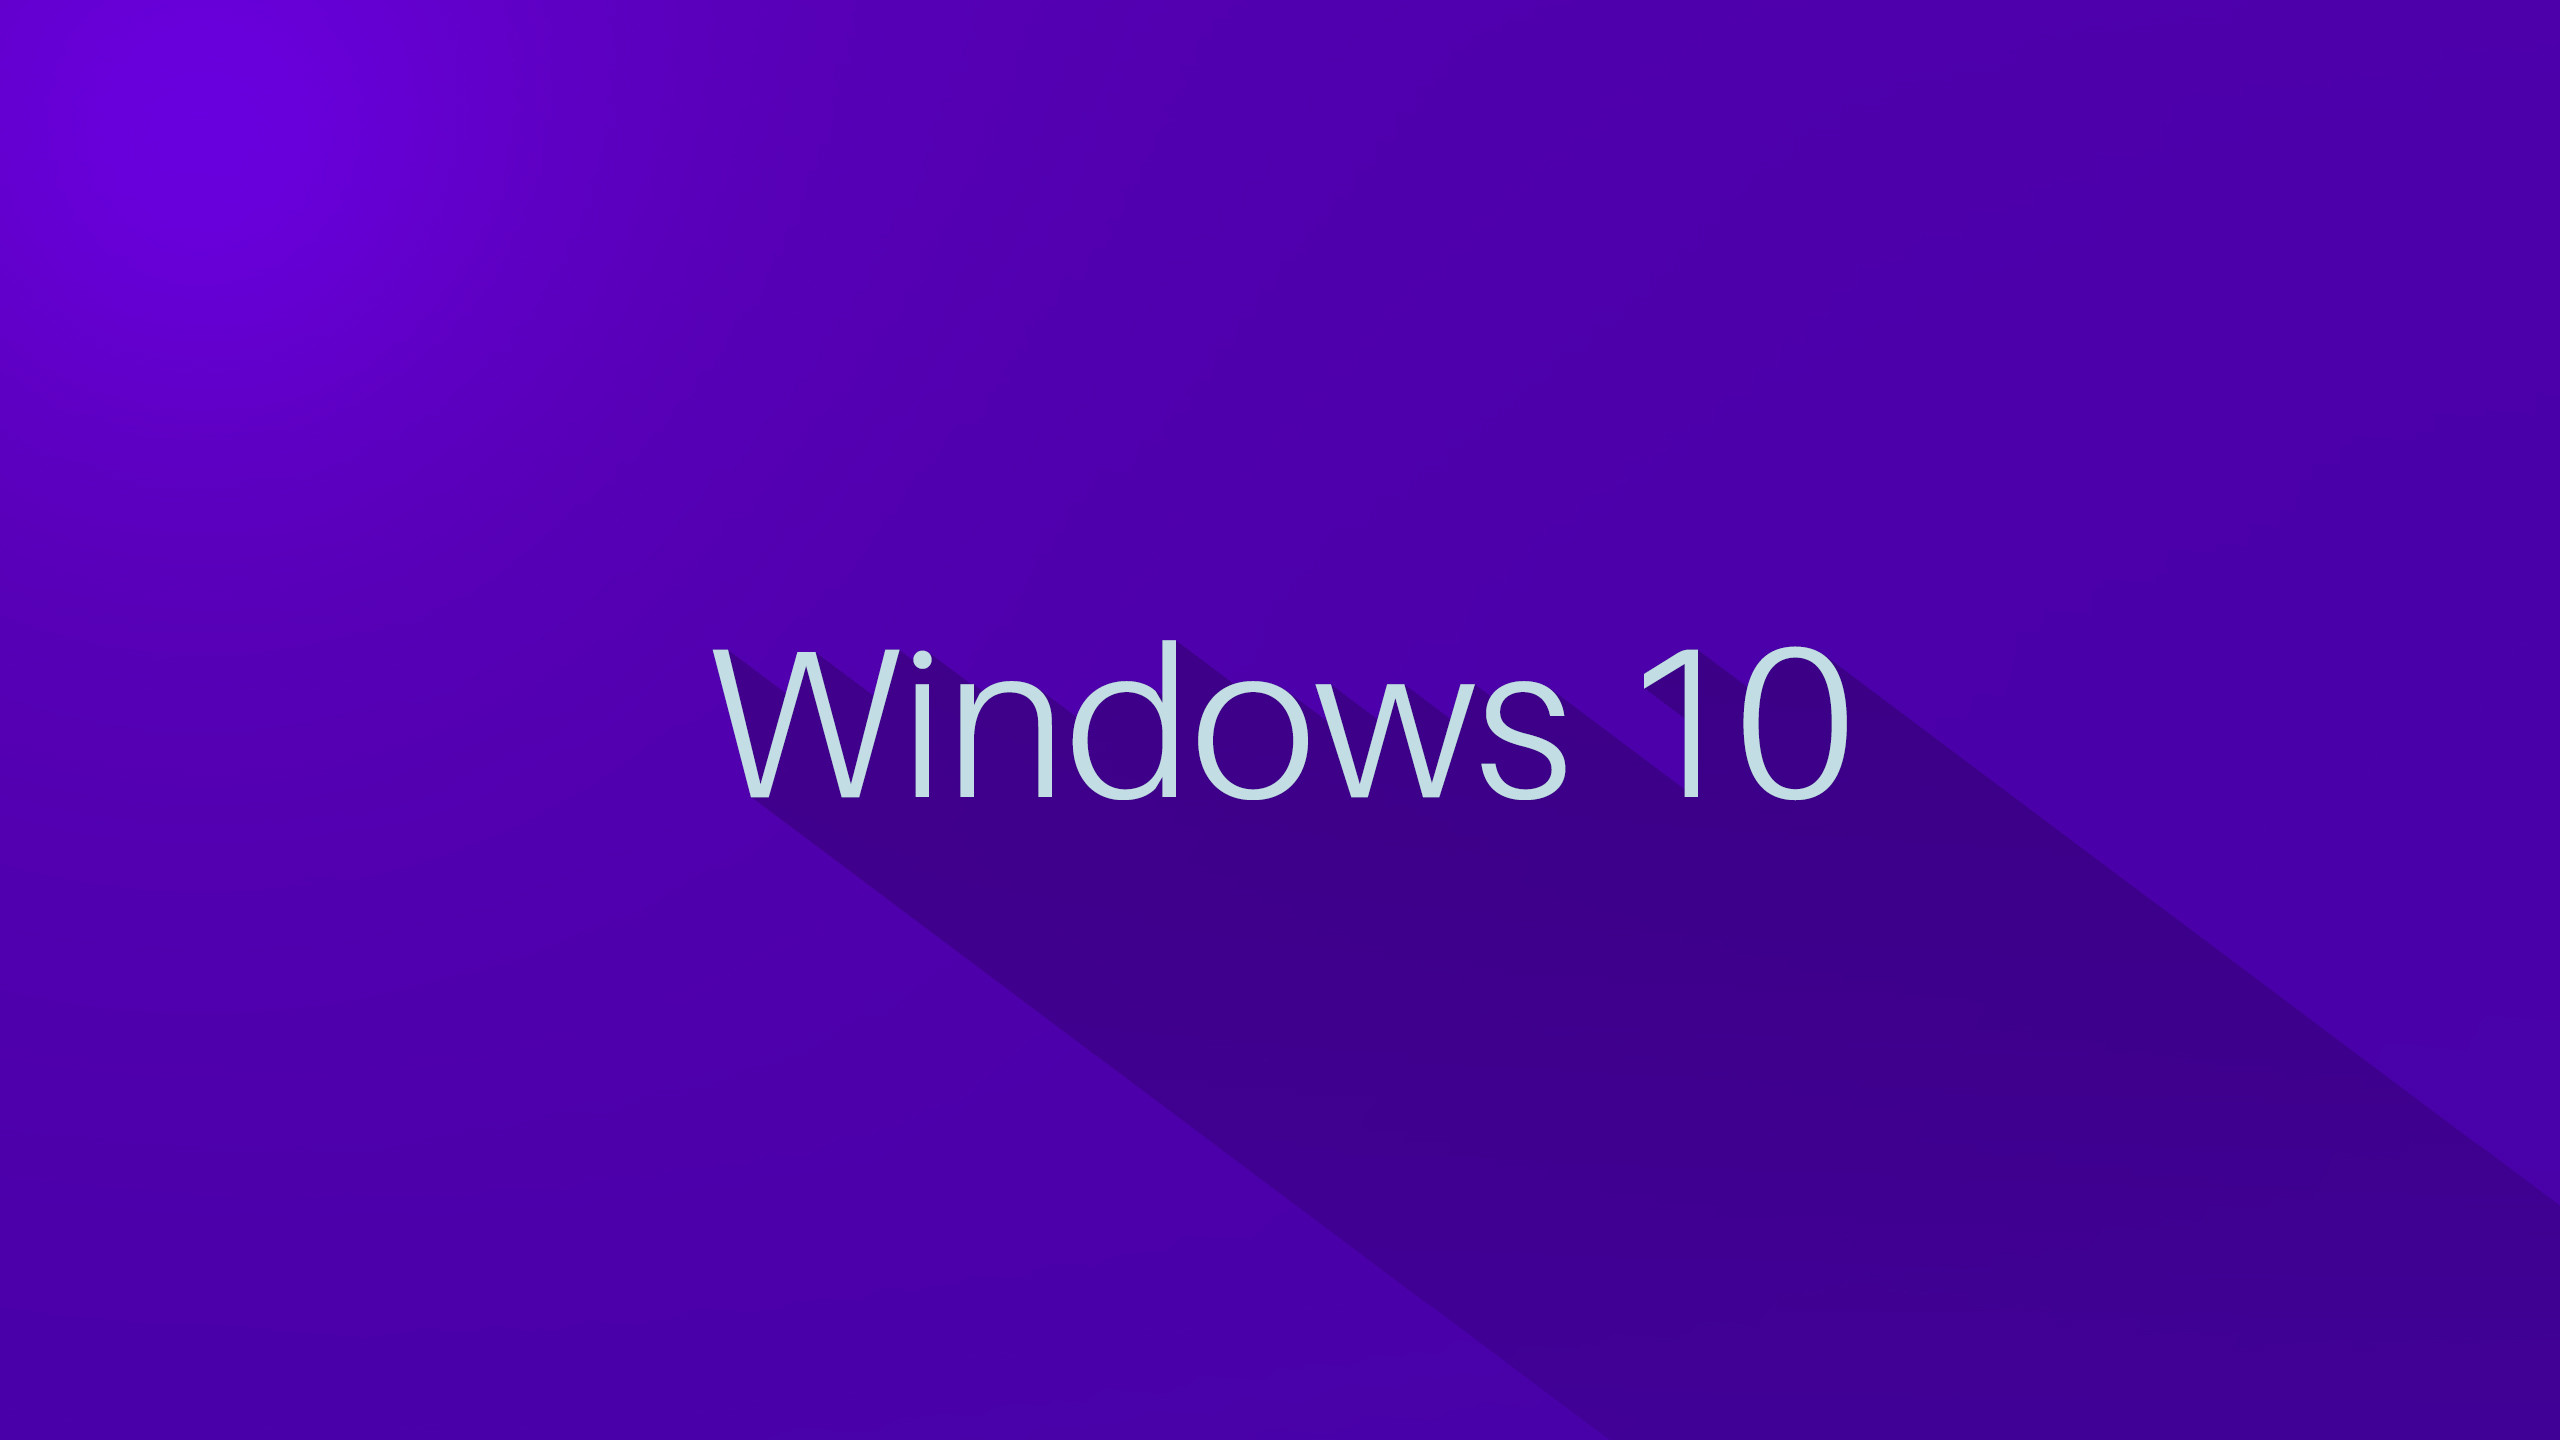 2560x1440 Windows-10-Wallpaper-1080p-Full-HD-Logo-on-